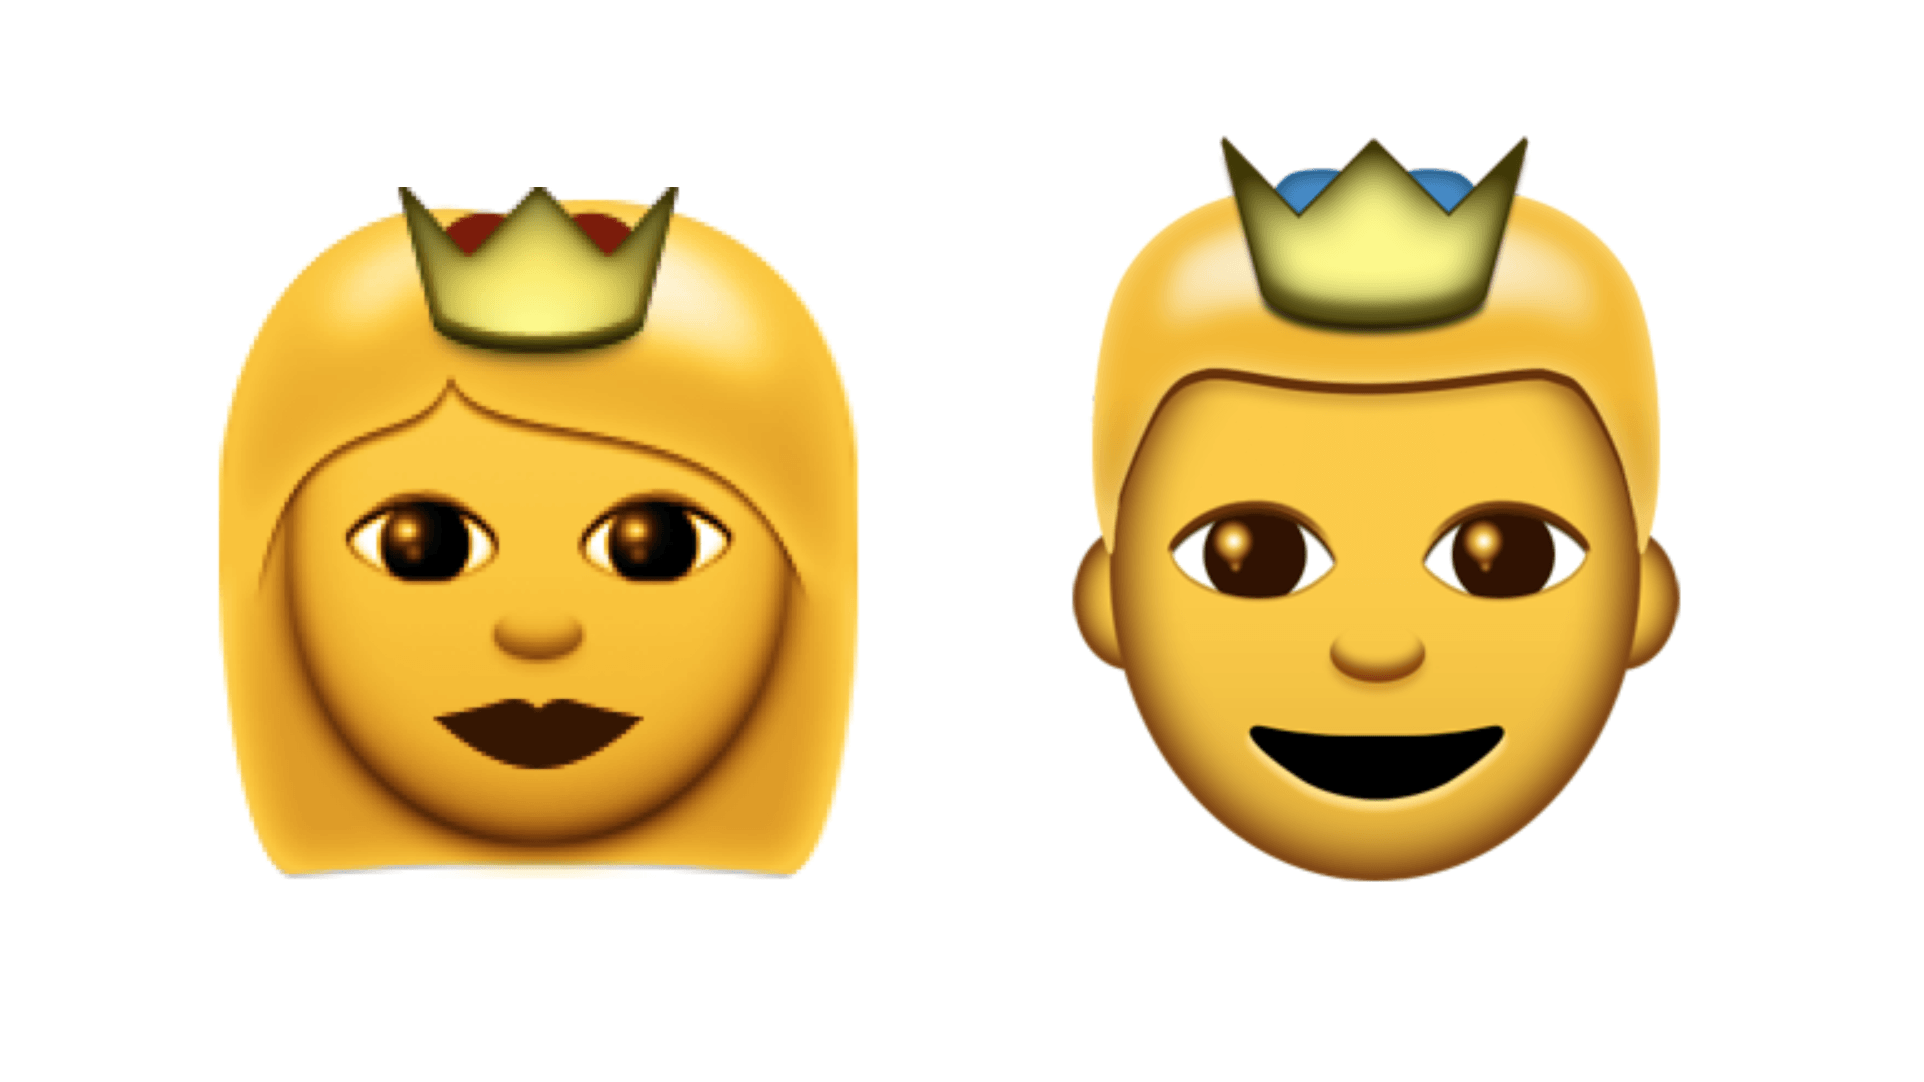 Surprised Face Emoji Wallpapers Desktop : Other Wallpapers